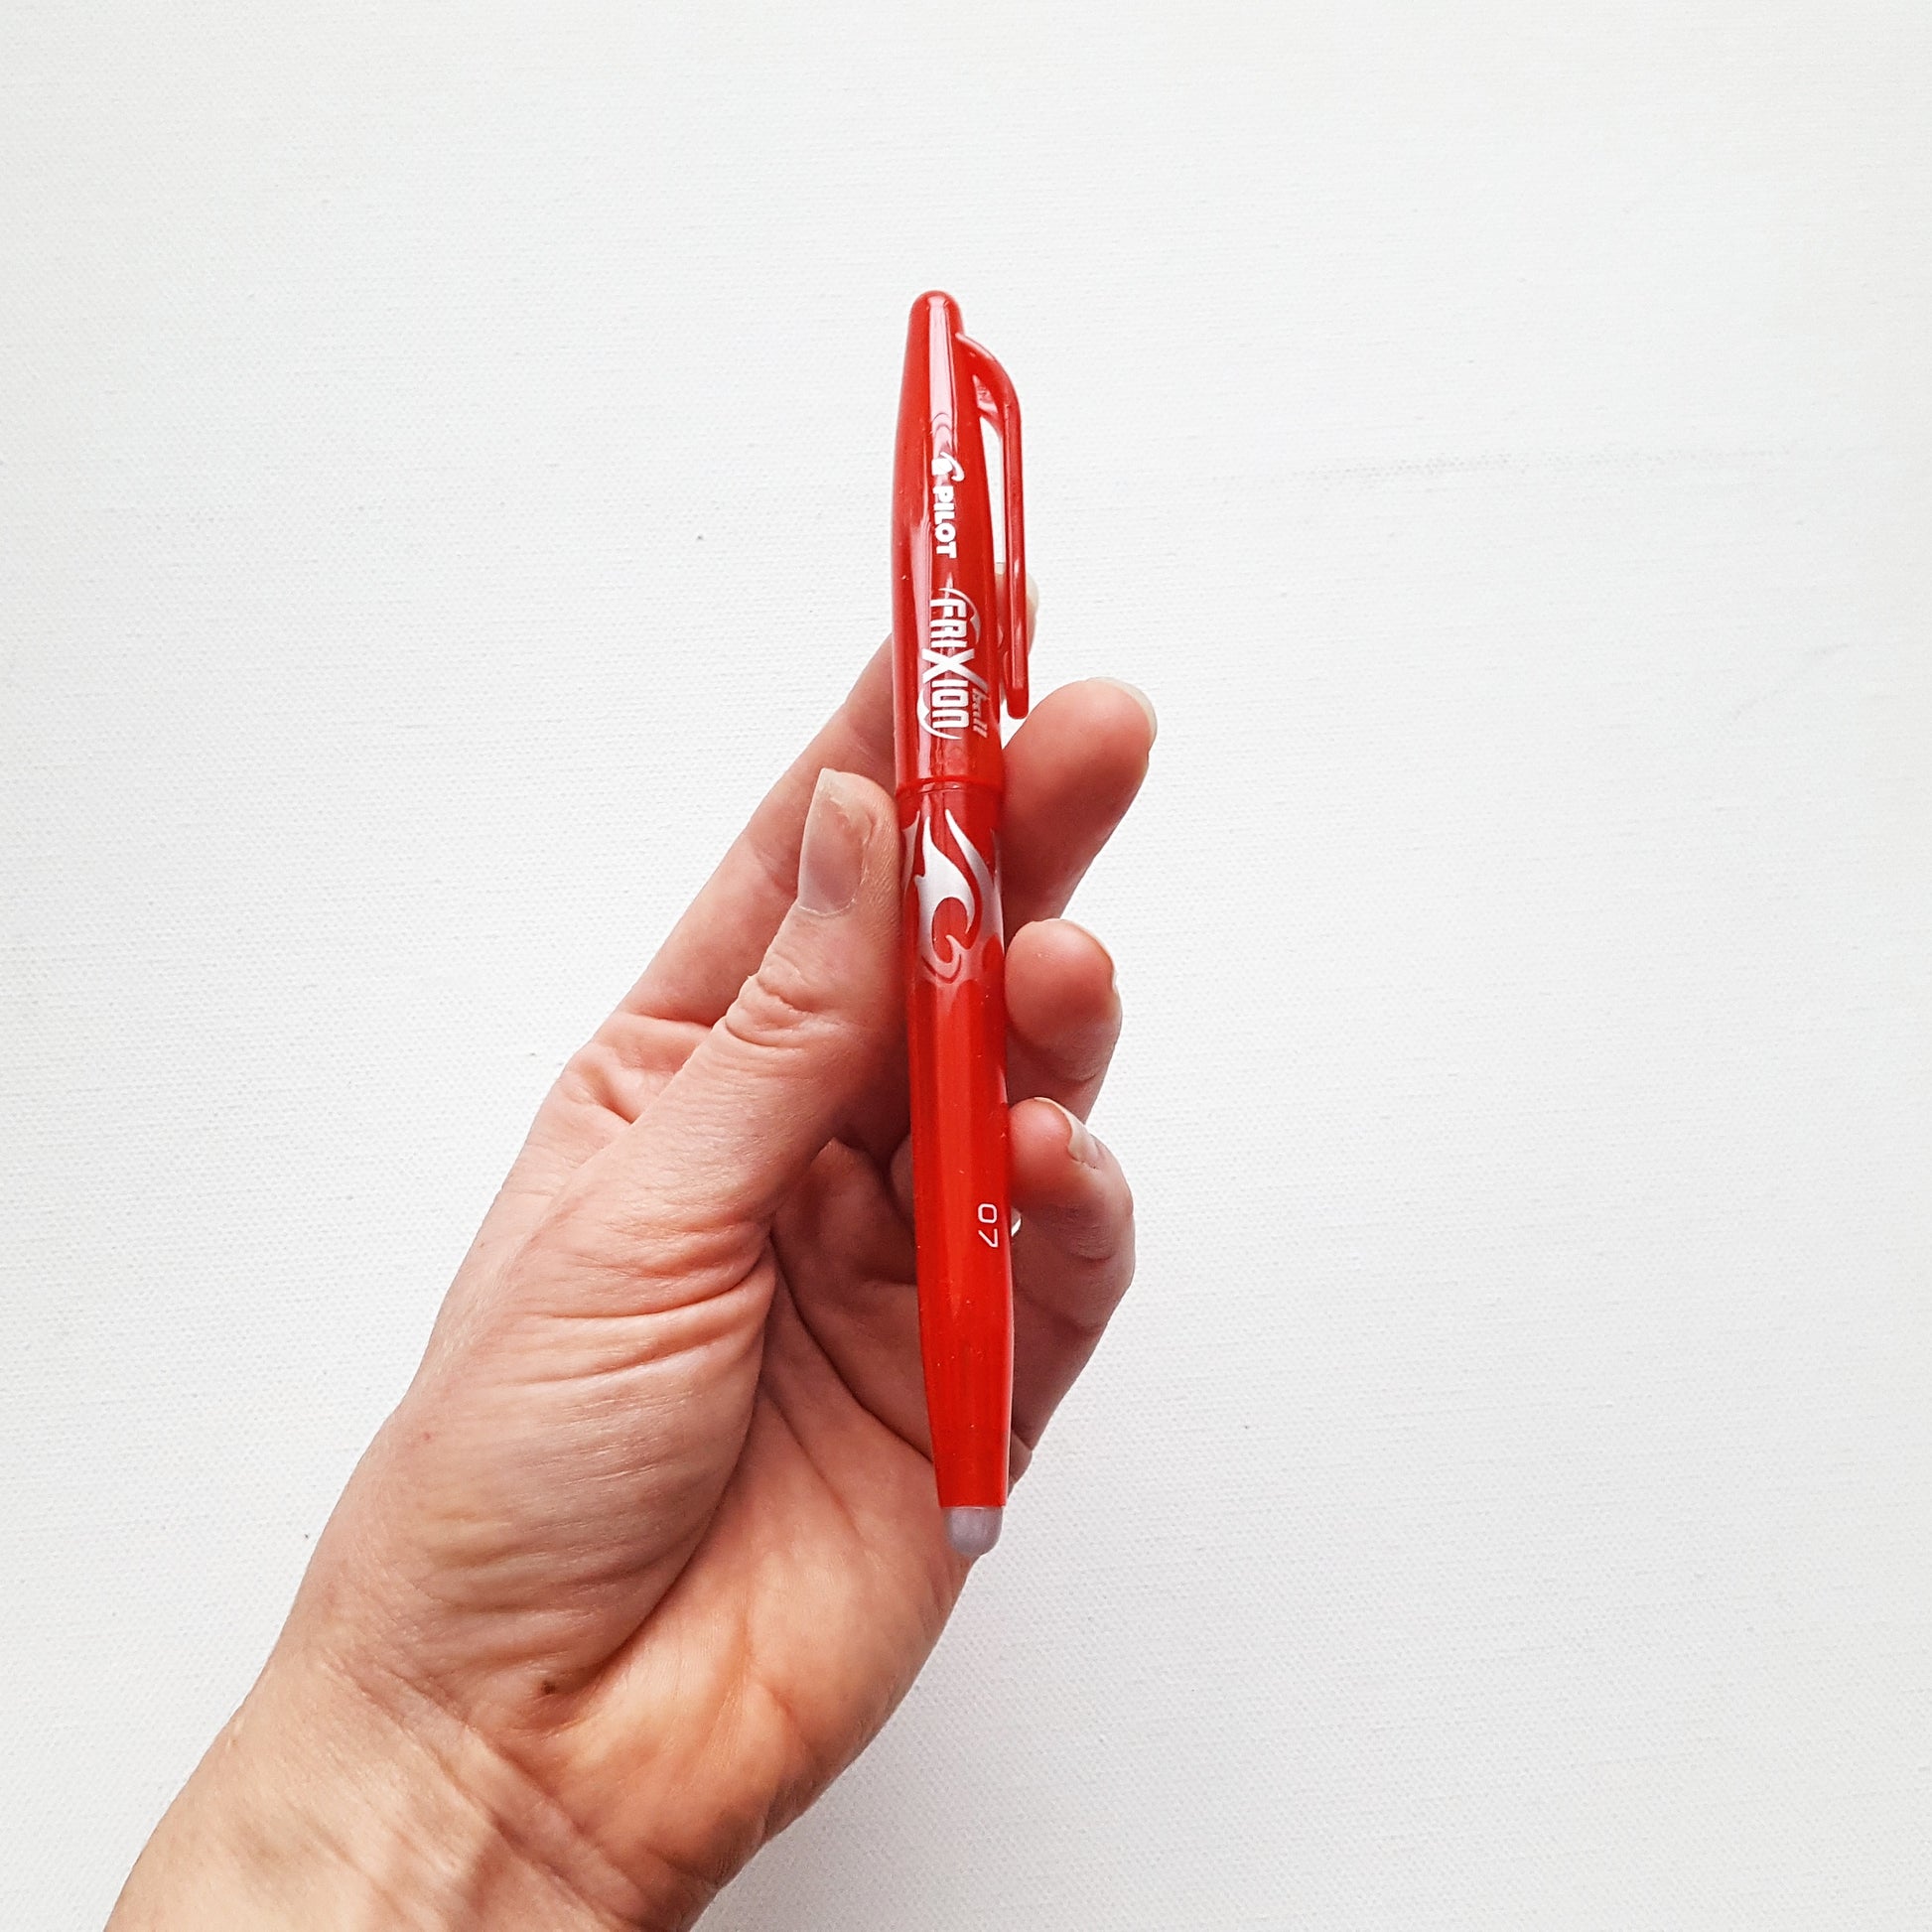 Pilot Frixion Heat Erasable Pen - The Fabled Thread